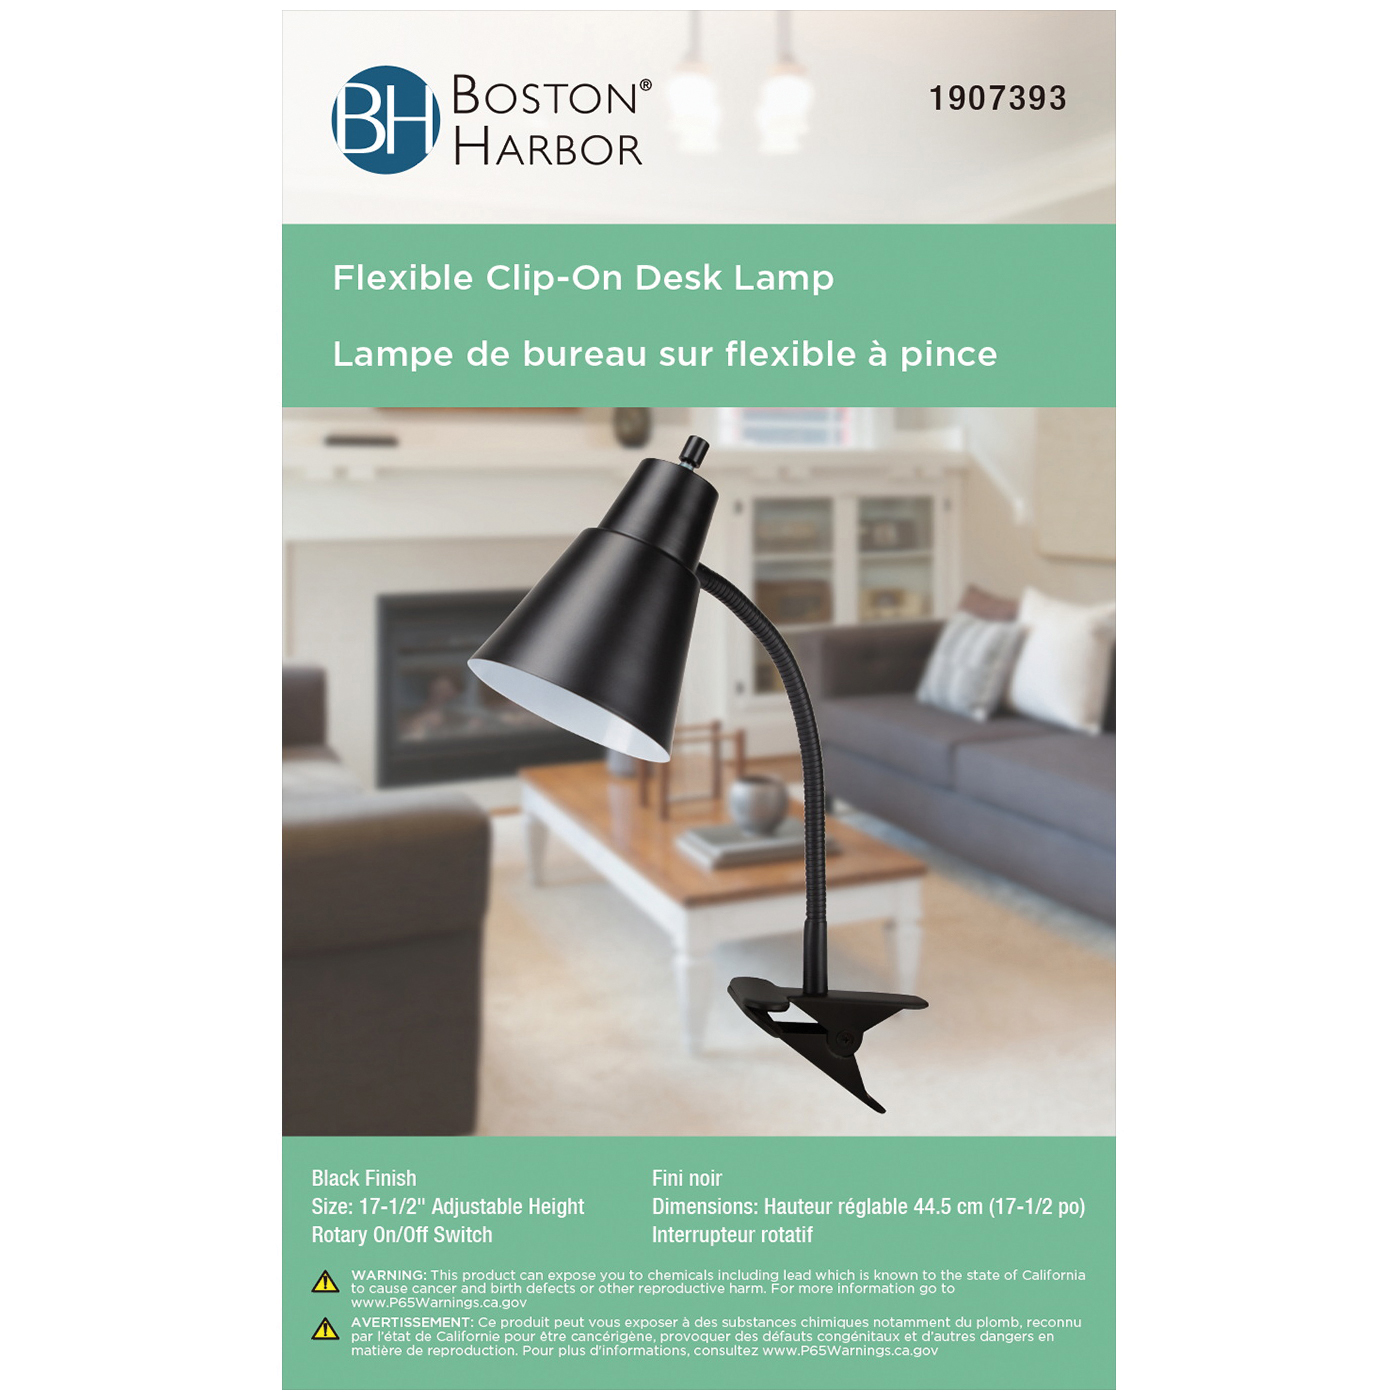 Boston Harbor TL-CL-170-BLACK3 Flexible Clip-On Desk Lamp, 120 V, 60 W, 1-Lamp, CFL Lamp, Black Fixture, Black - 2